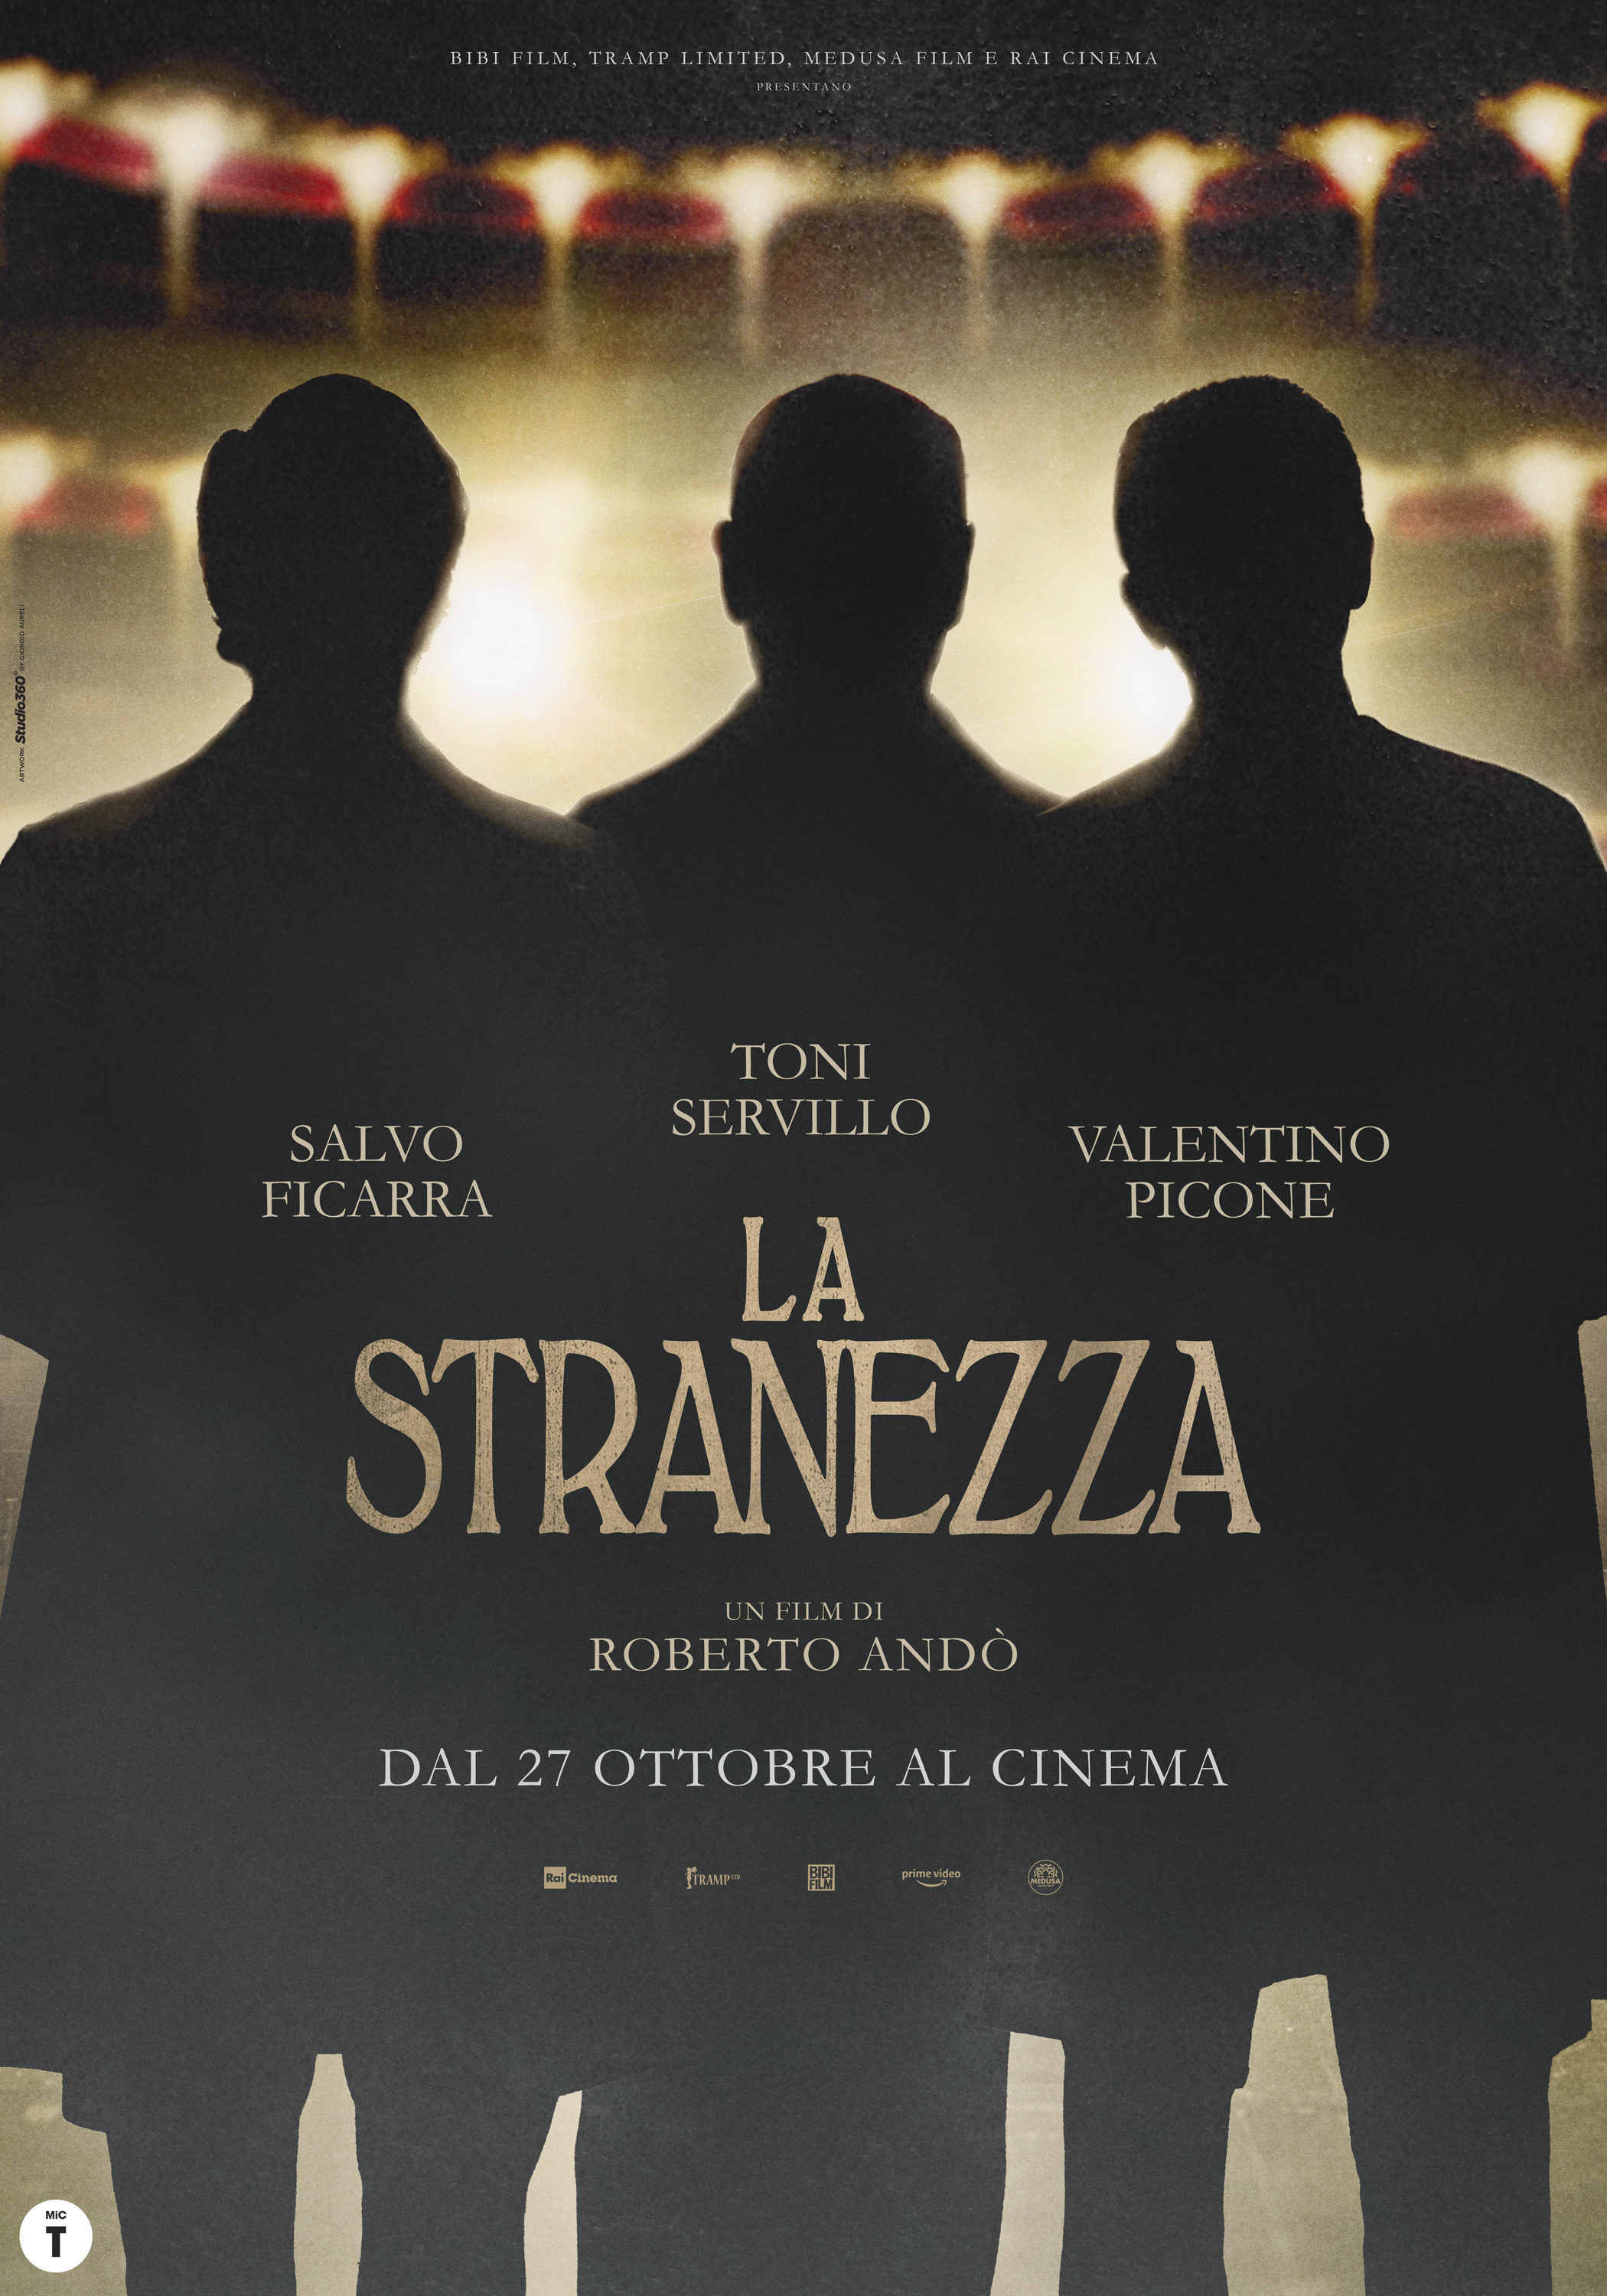 Mega Sized Movie Poster Image for La stranezza (#1 of 3)